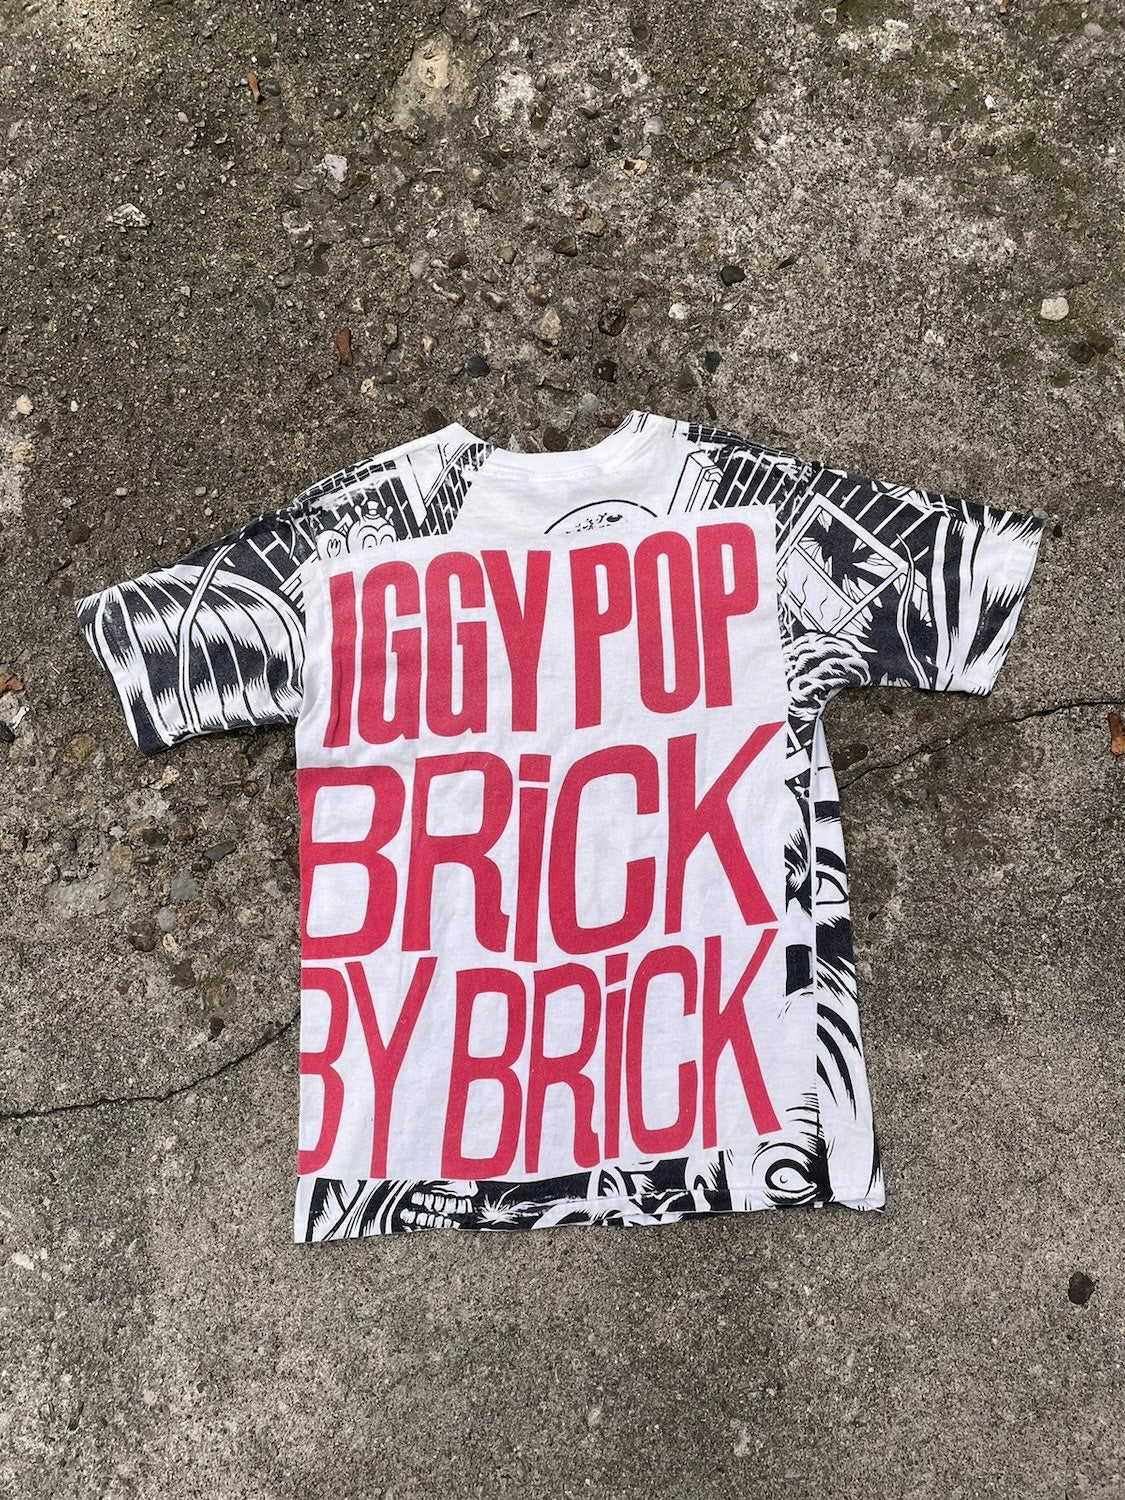 1990 Iggy Pop 'Brick by Brick' Band T-Shirt - L